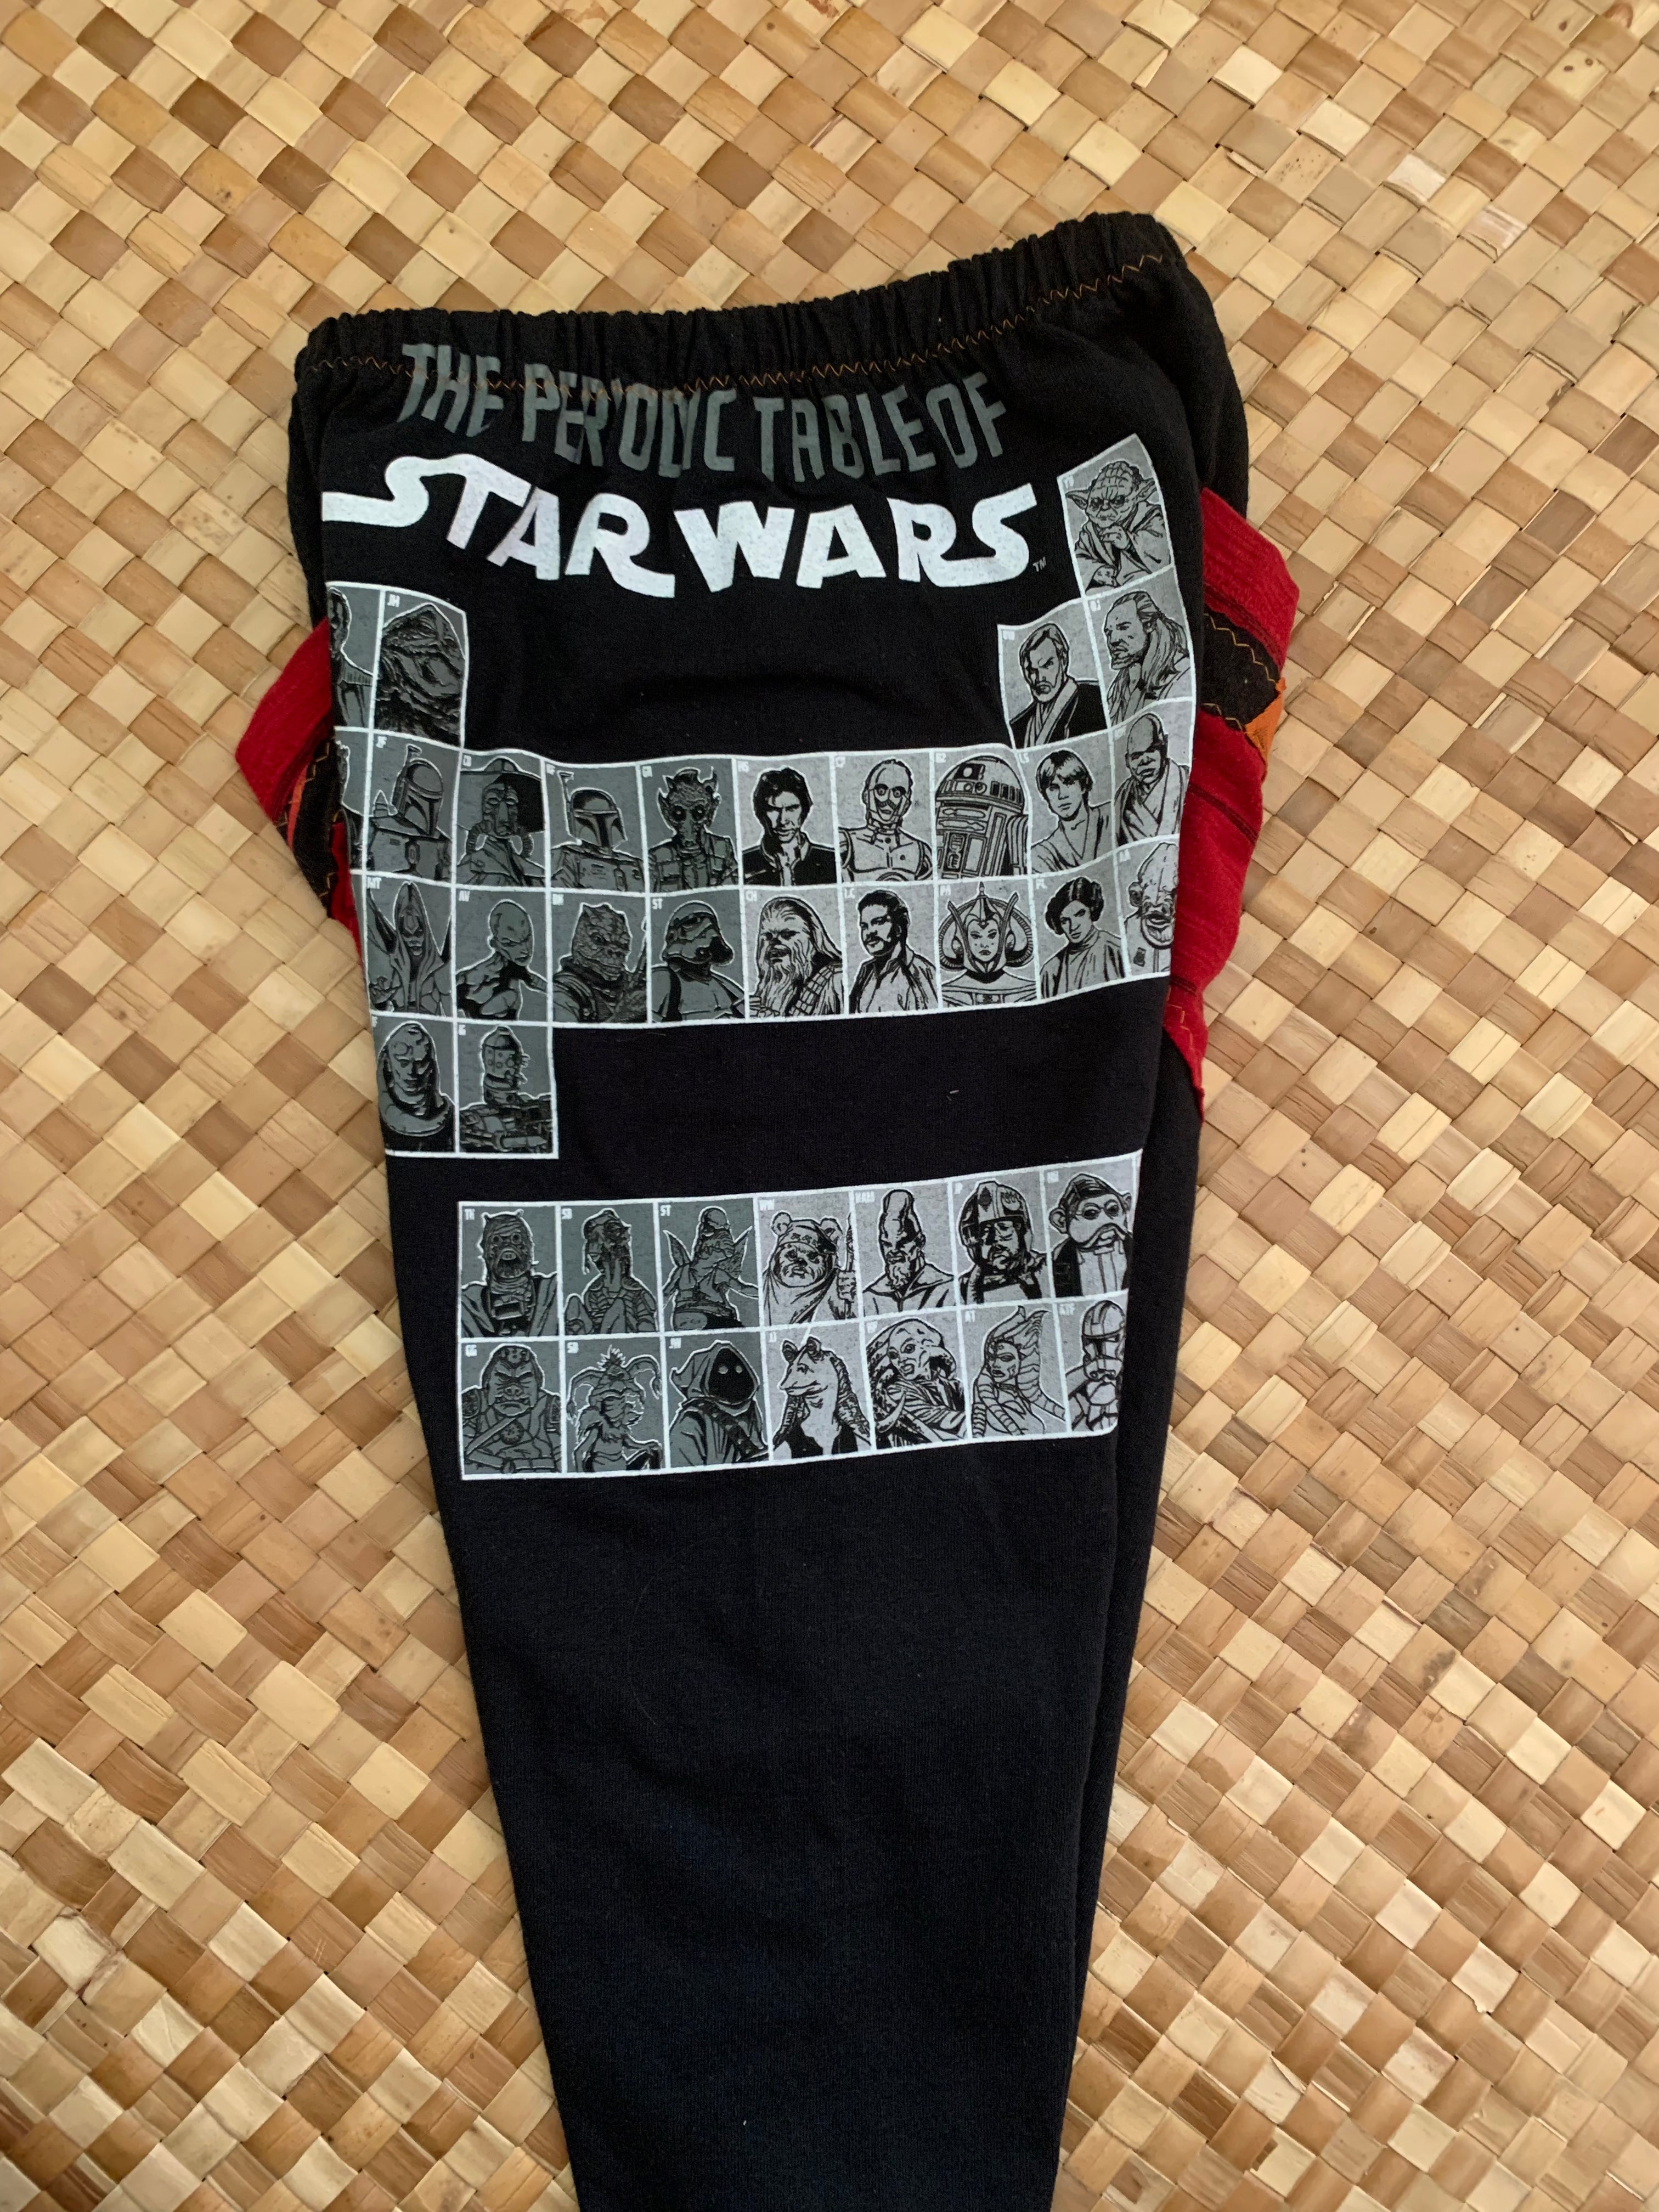 Kids Size 8 "Black & Red Star Wars" ʻOpihi Picker Pants